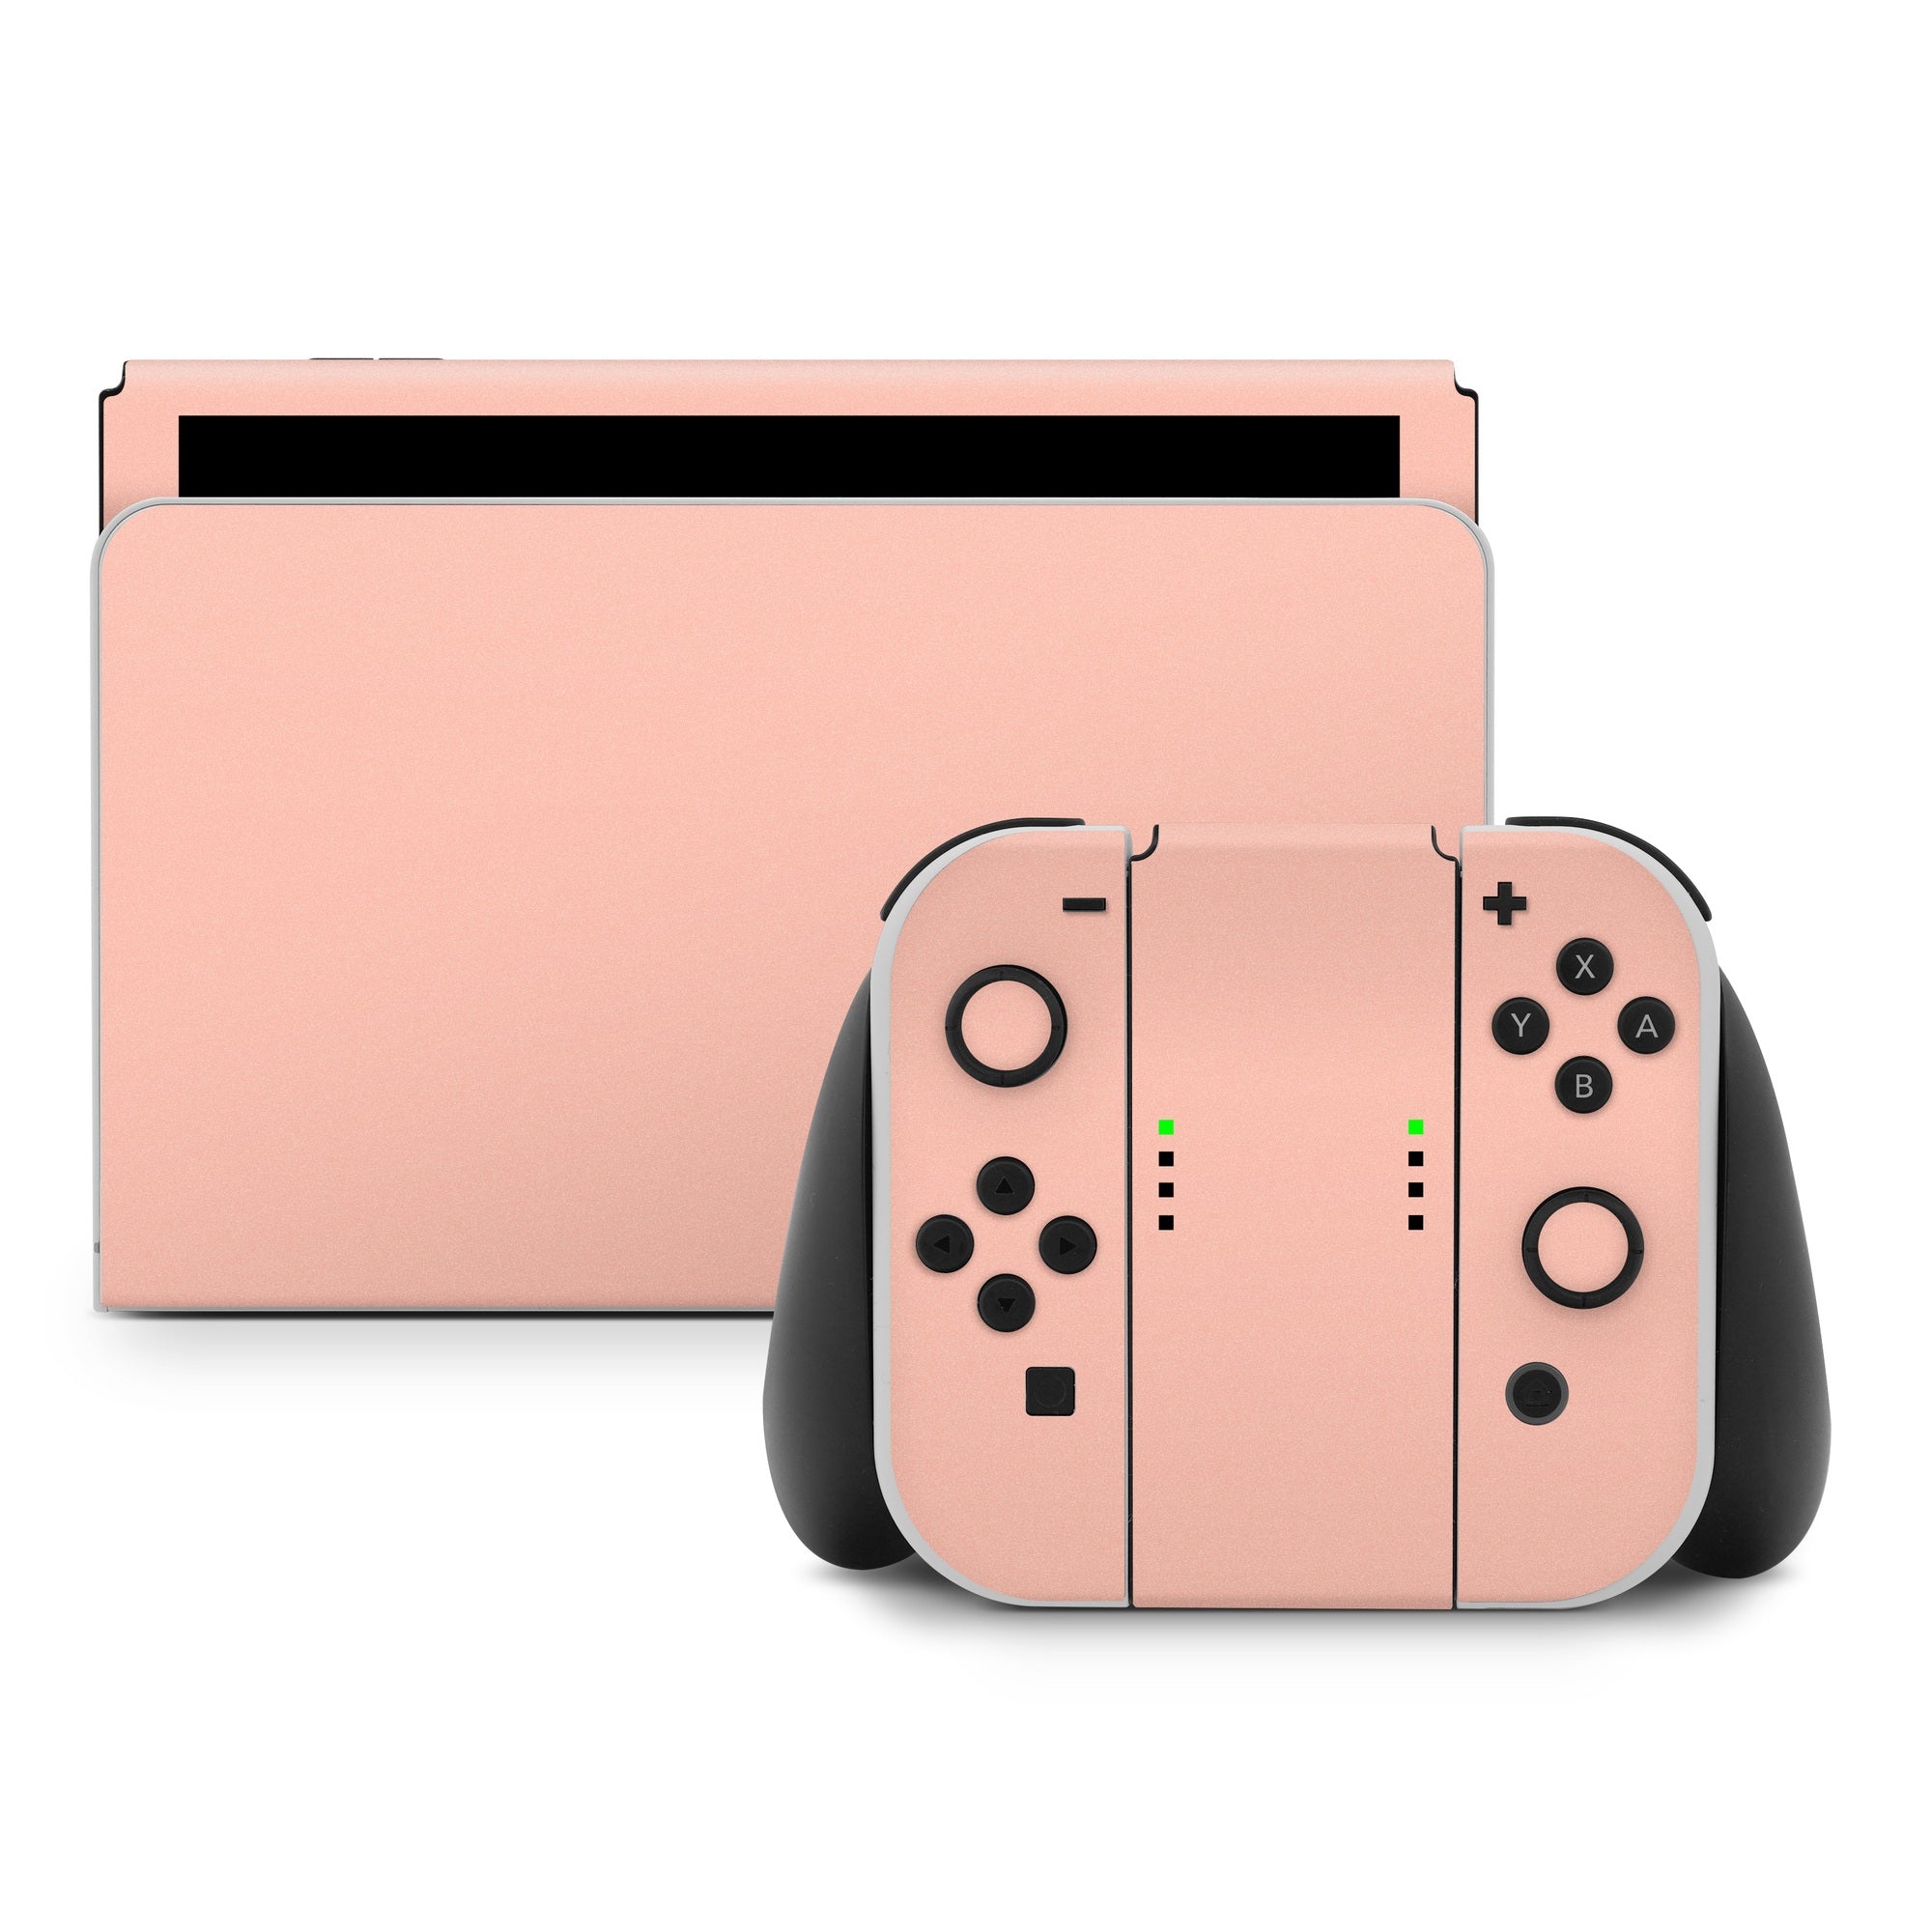 Solid State Peach - Nintendo Switch Skin